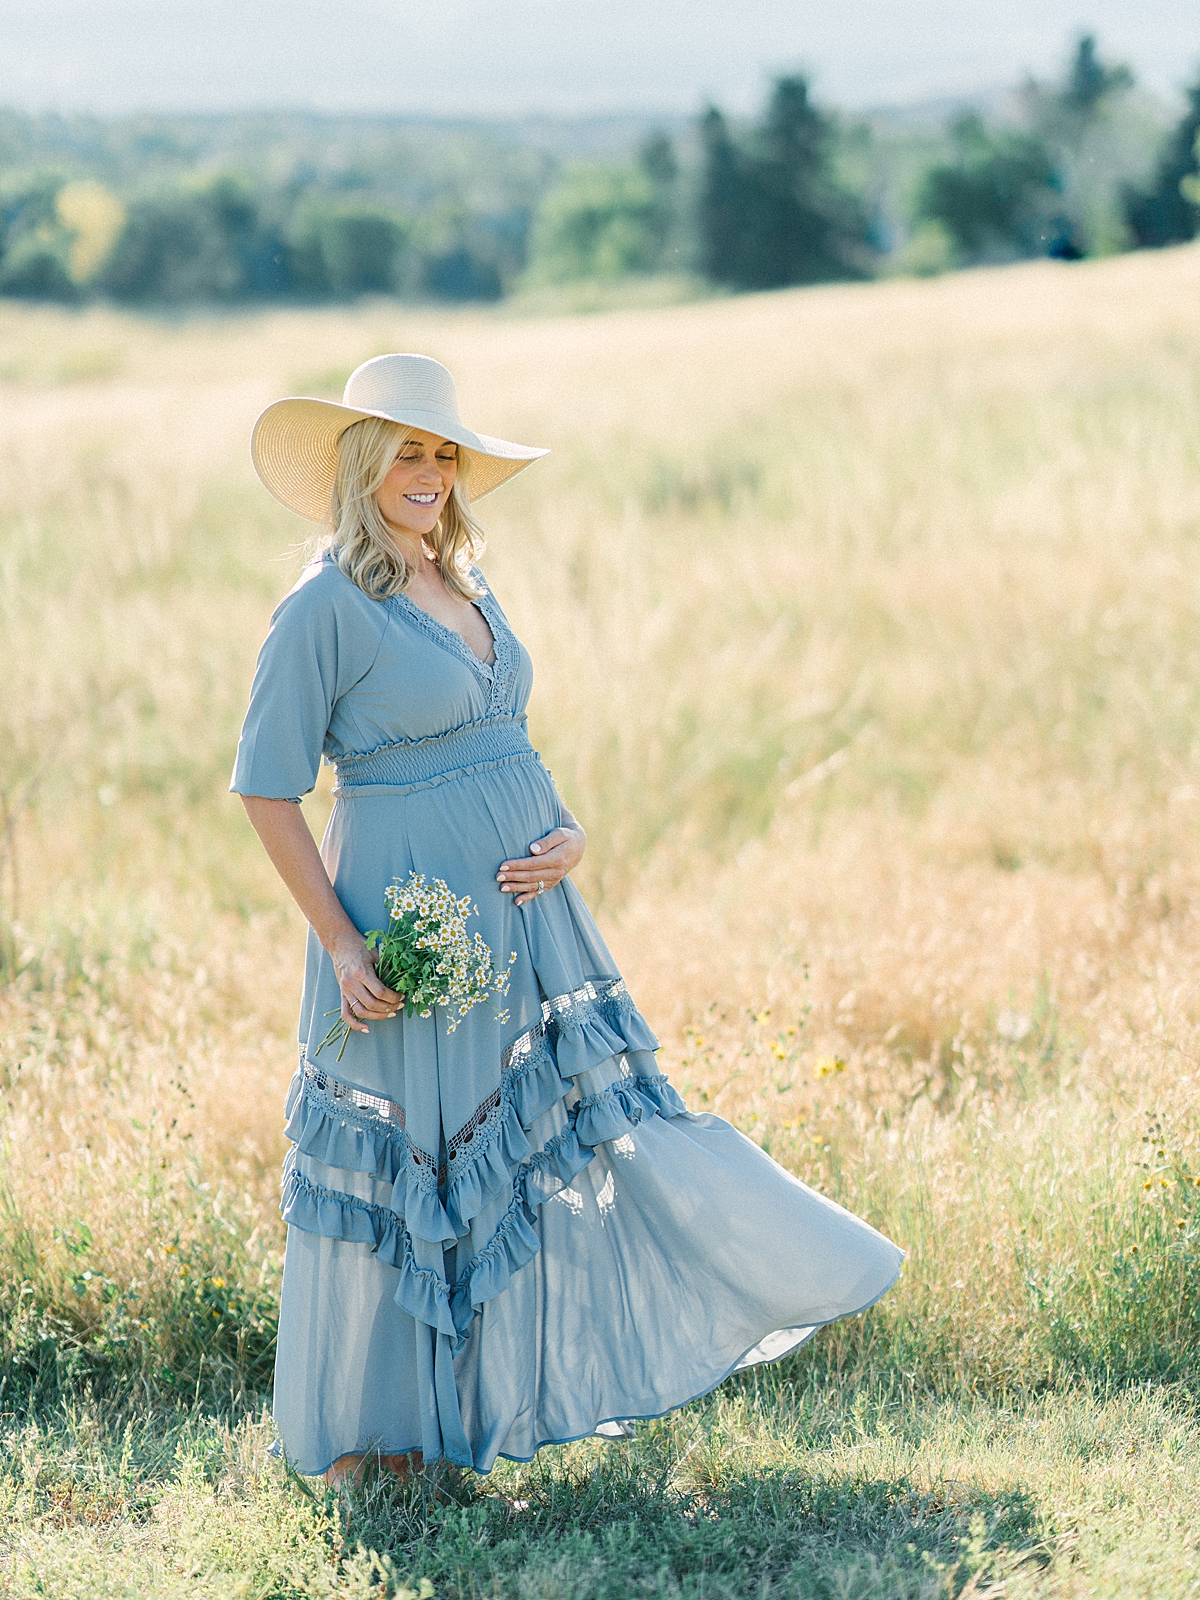 Highlands Ranch maternity photos